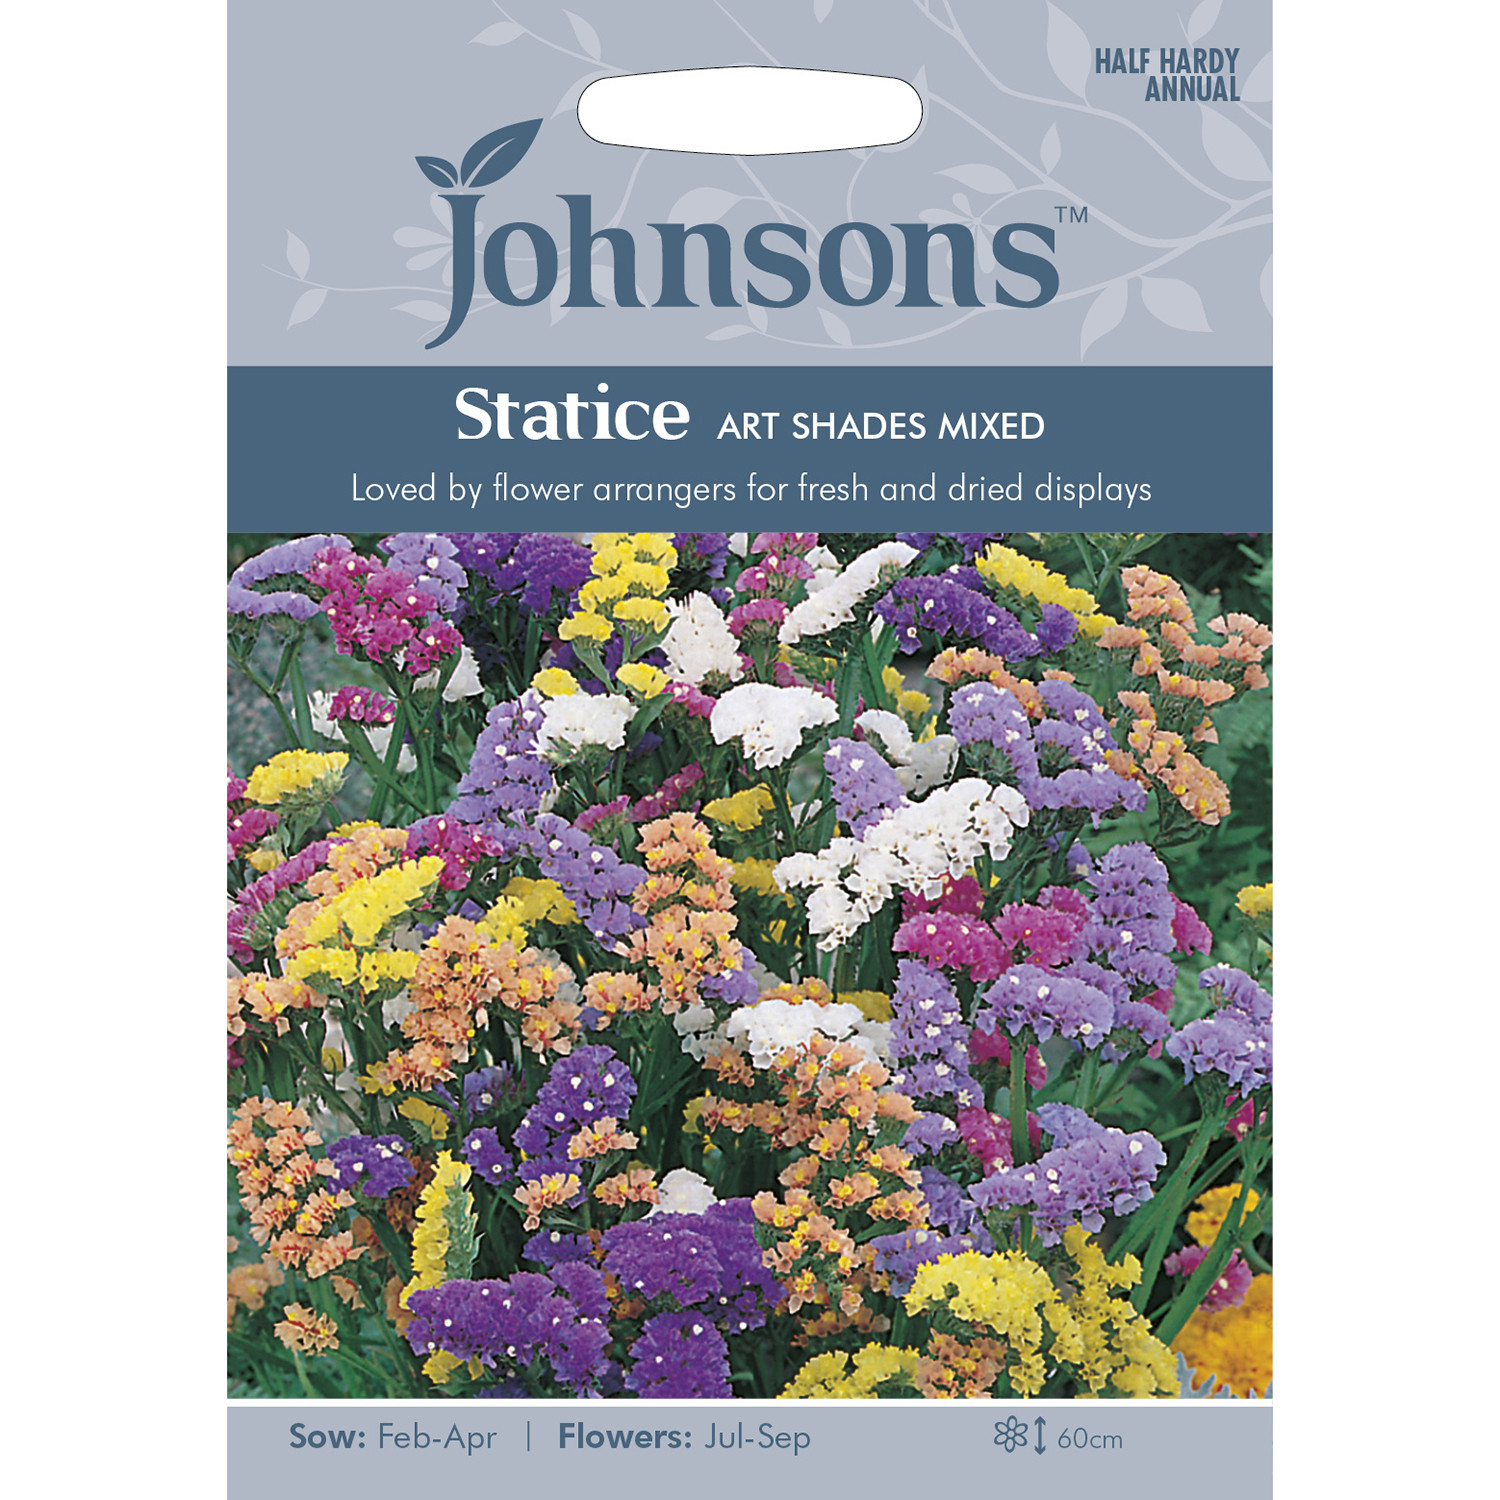 Johnsons Statice Art Shades Mixed Flower Seeds Image 2